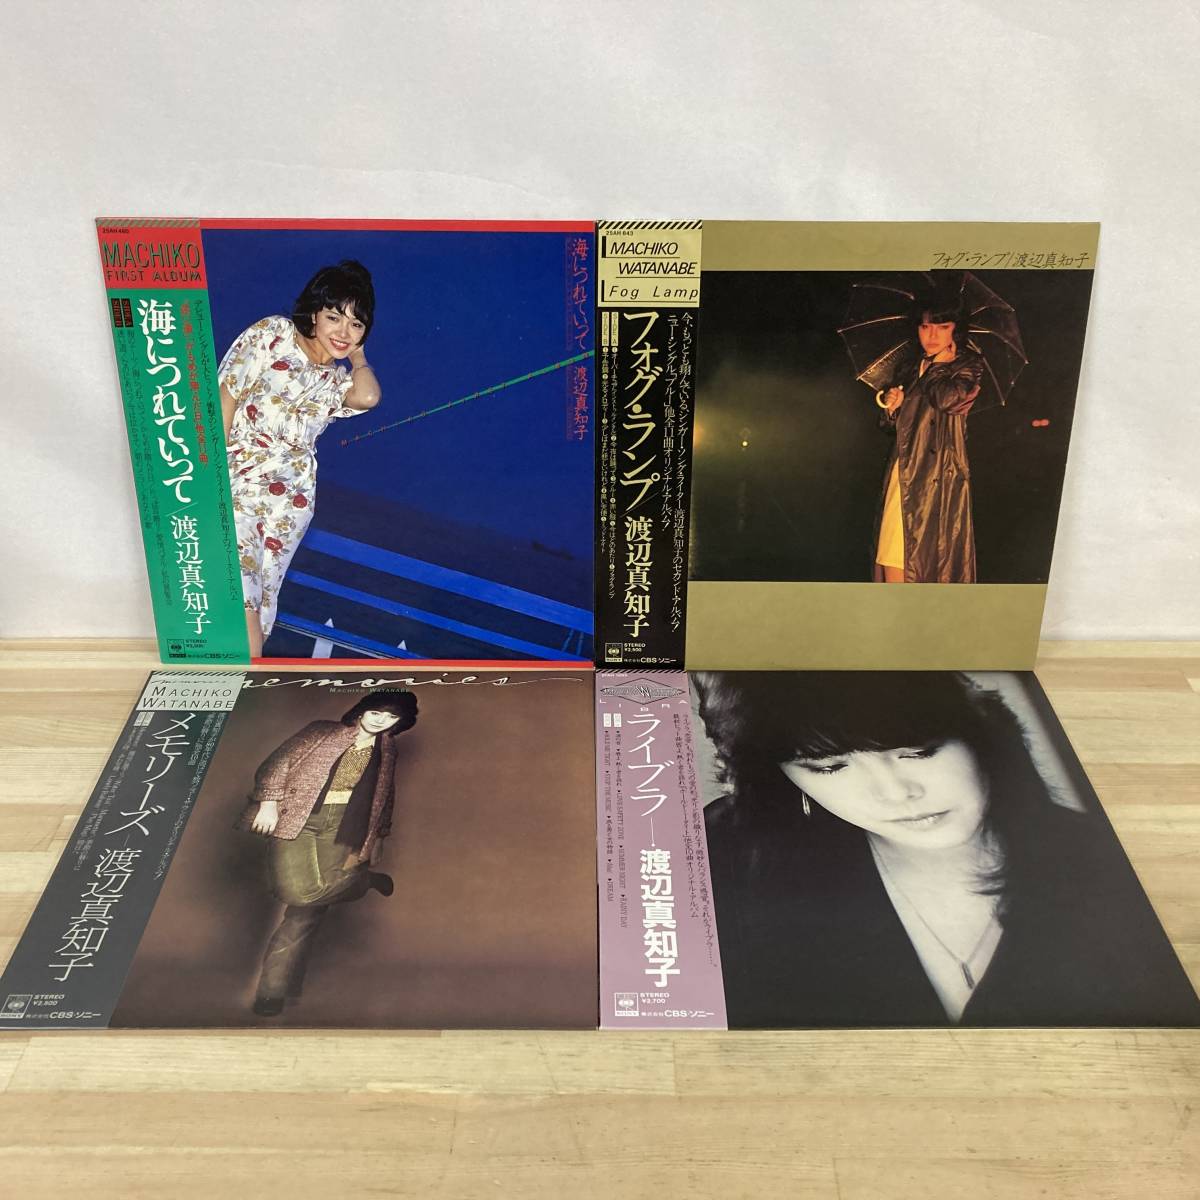 g30#[ domestic record /LP/ set ] Watanabe Machiko summarize 4 pieces set * sea ......./ foglamp * lamp / memory z/ Live la210907